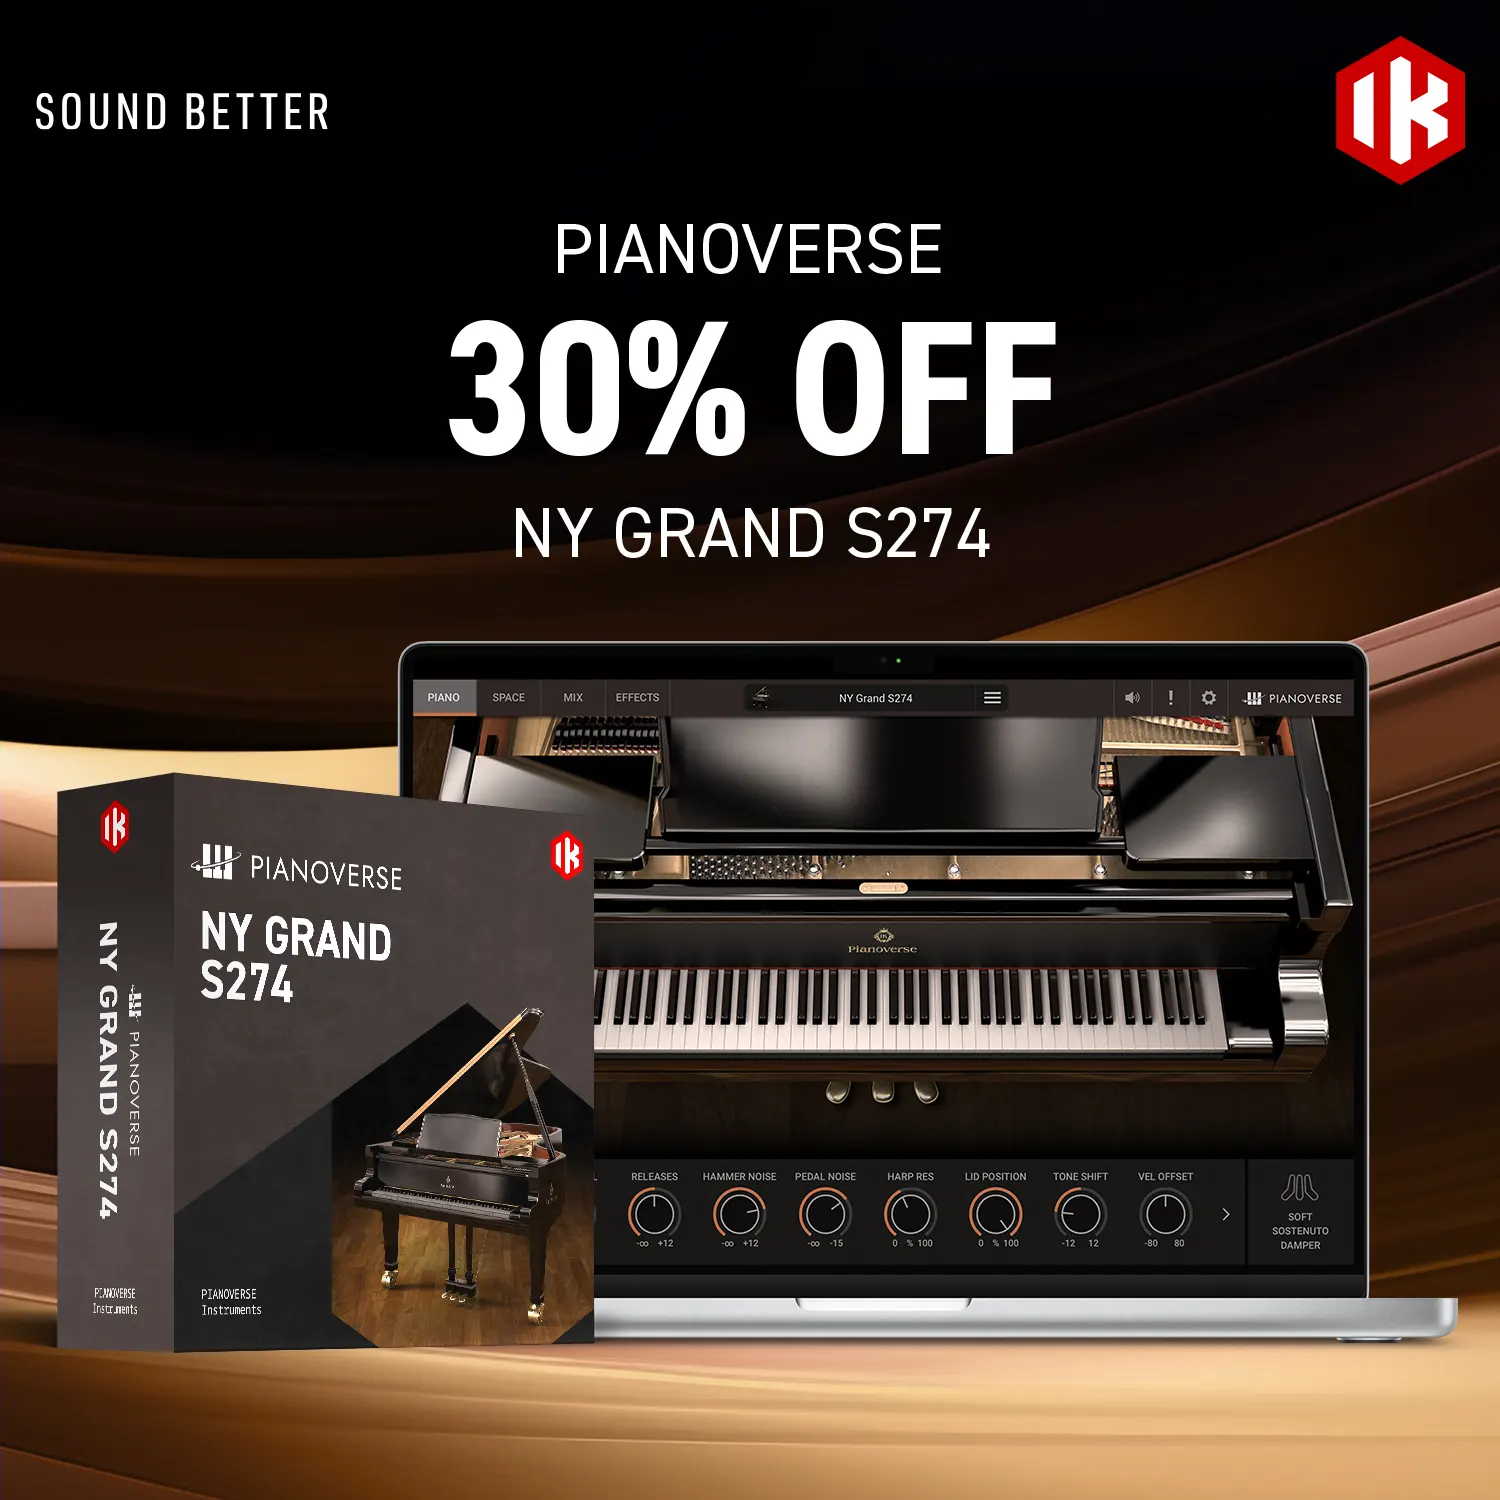 [Added Pianoverse MAX, MODO MAX, SampleTank 4 MAX v2] Hammond B-3X and Pianoverse NY Grand S274 on sale